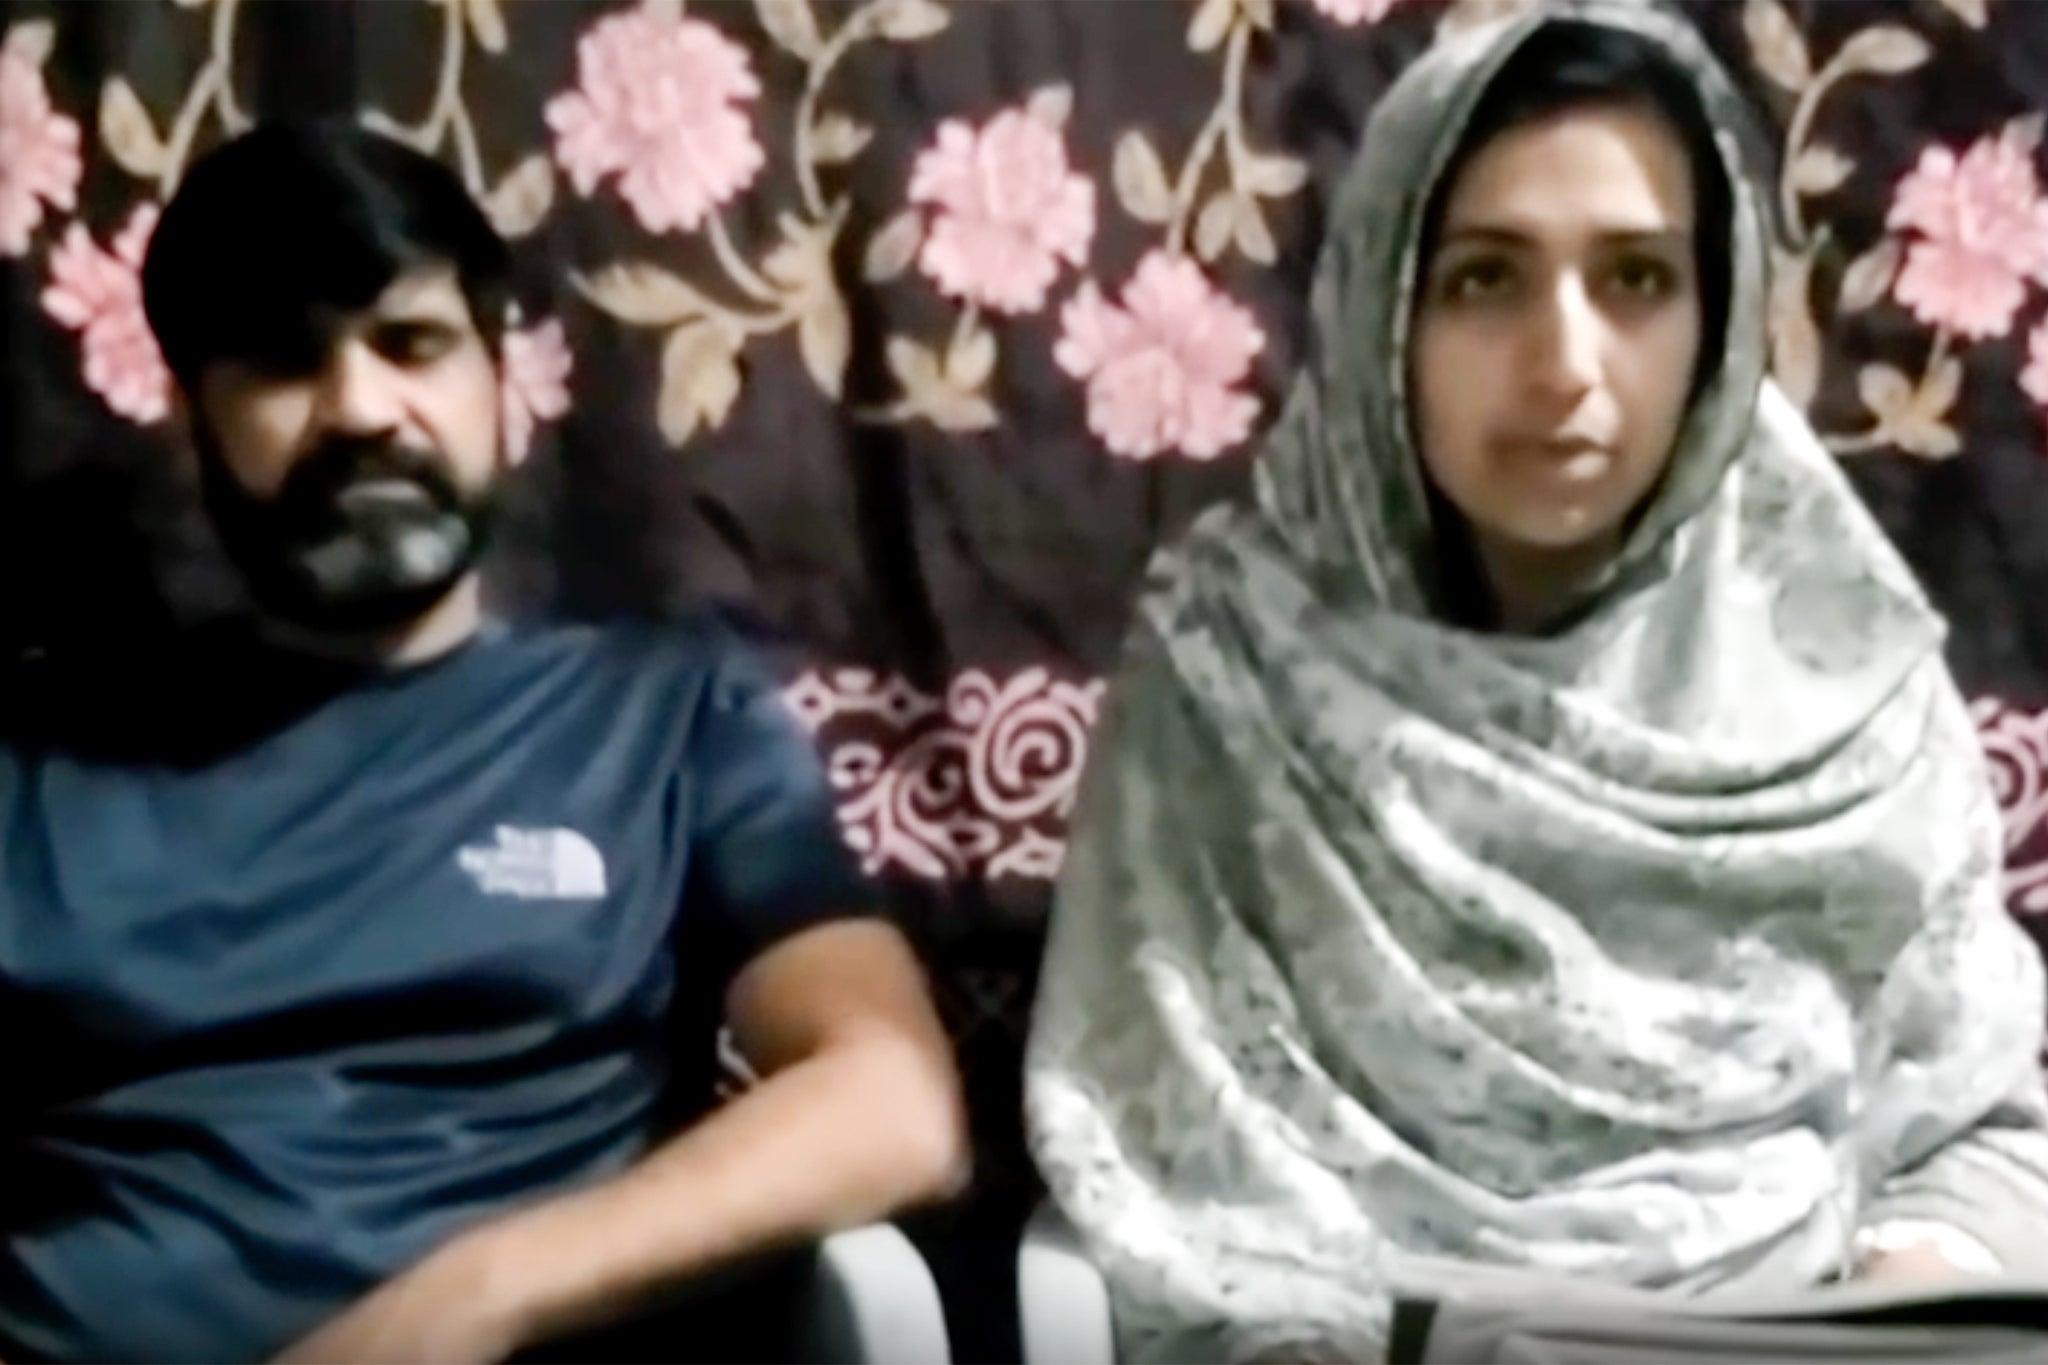 Sara’s father, Urfan Sharif, and his wife, Beinash Bhatool